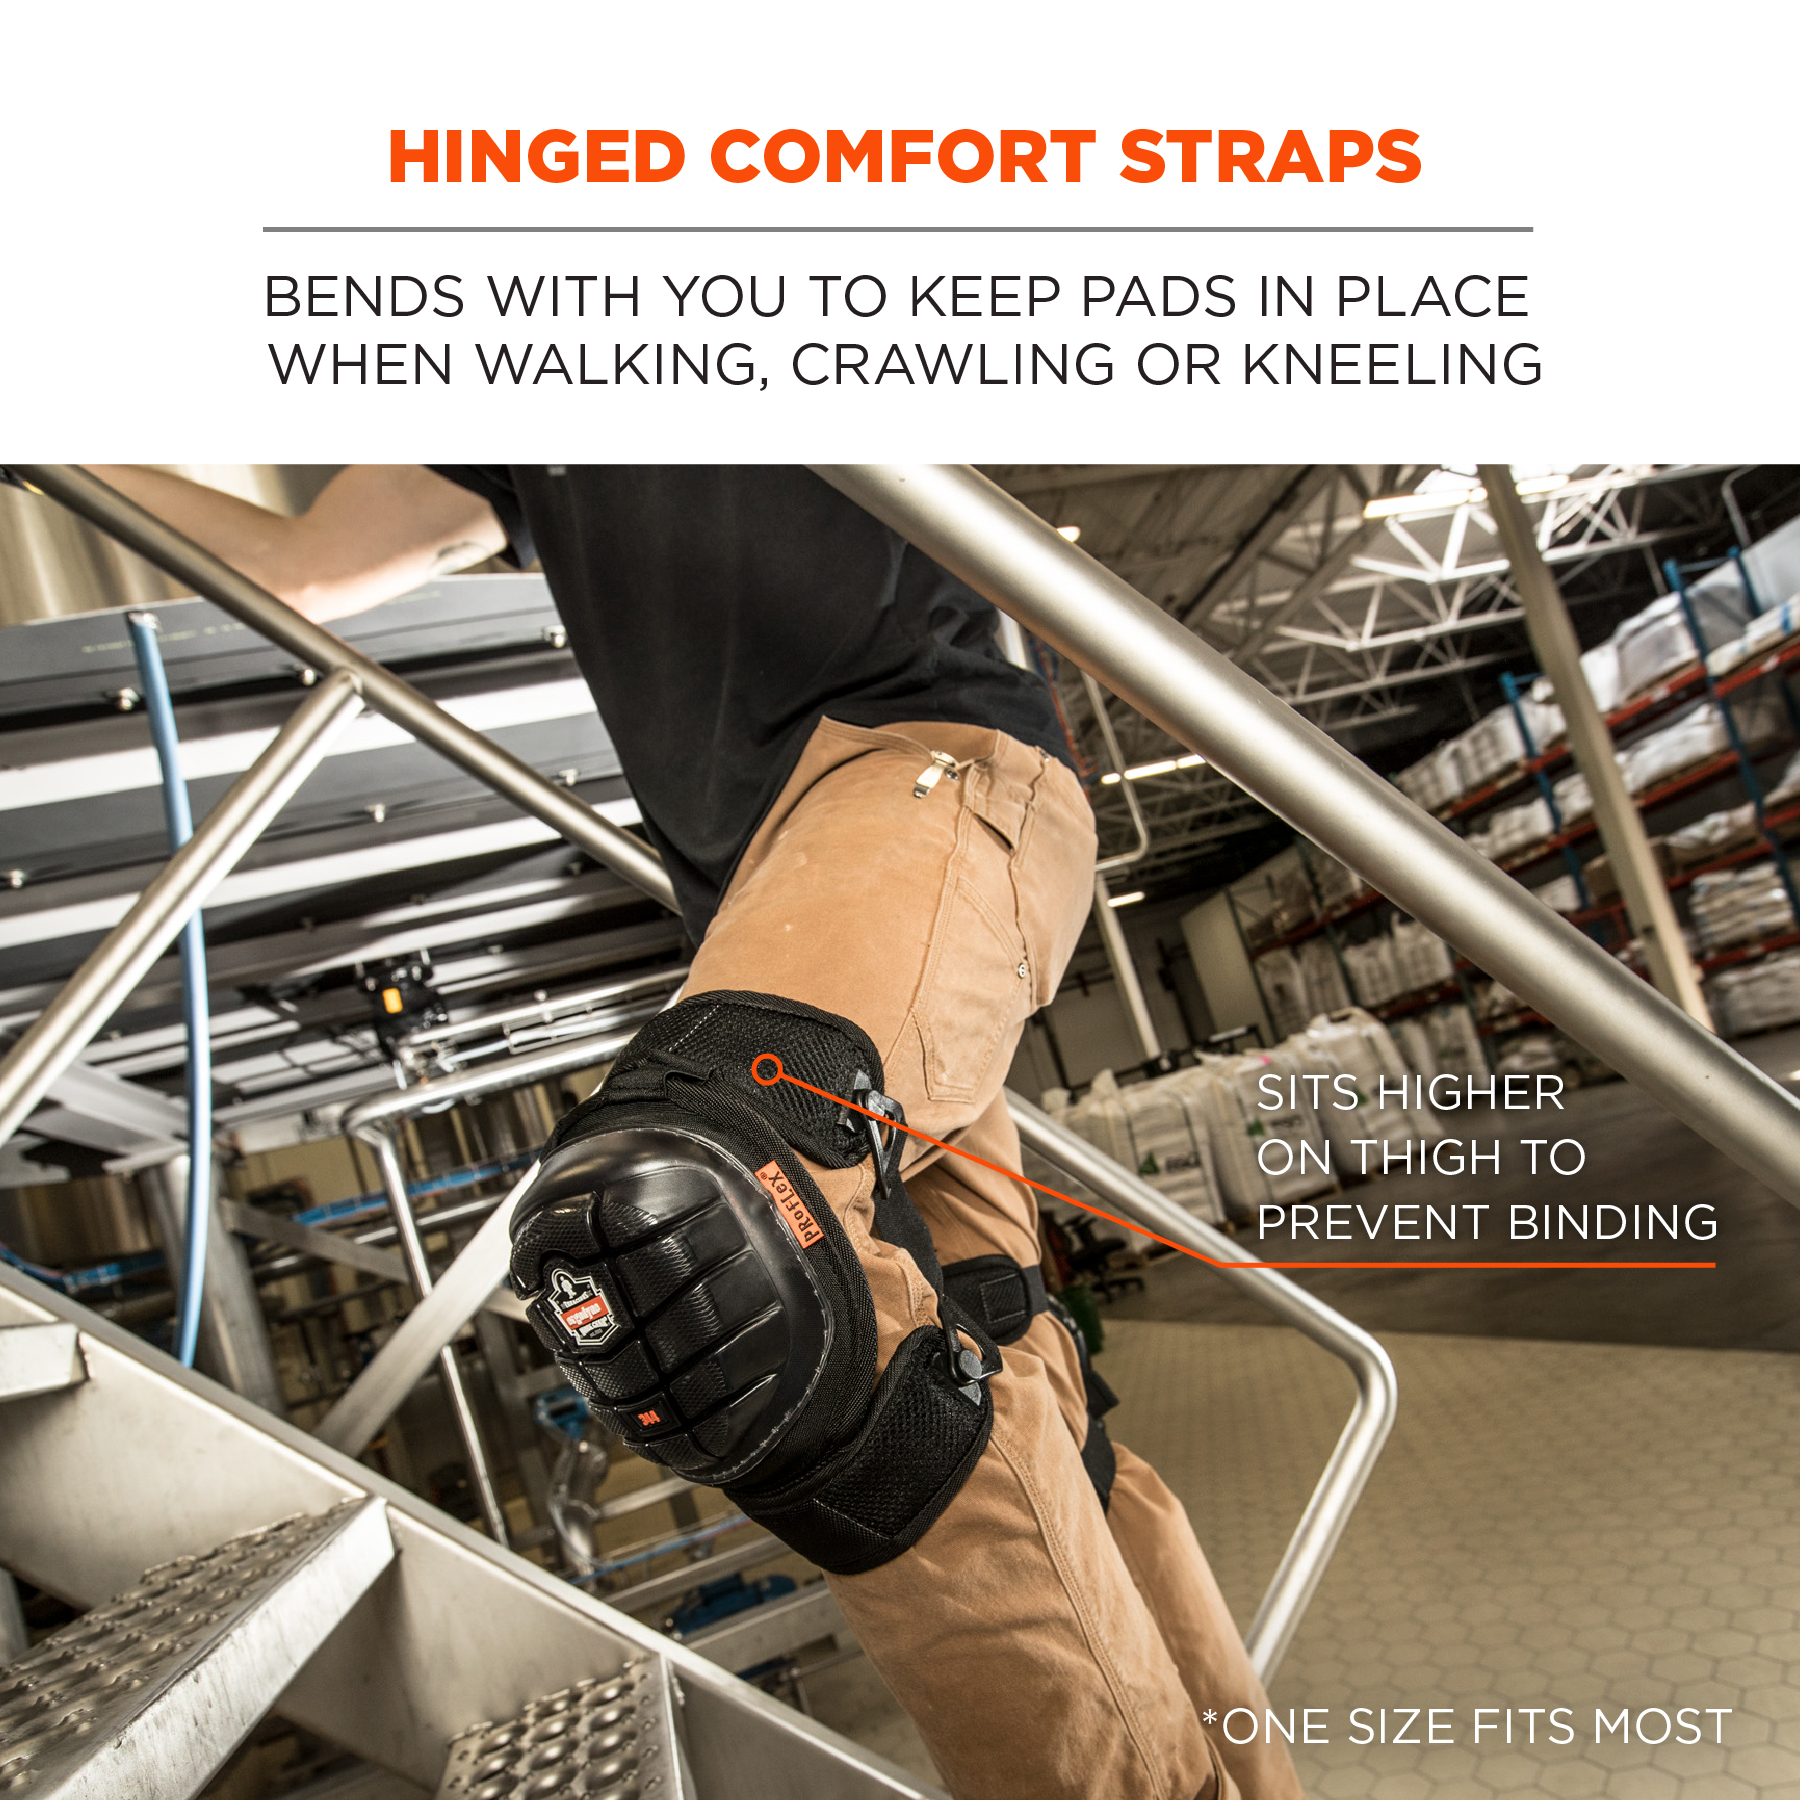 https://www.ergodyne.com/sites/default/files/product-images/18444-344-injected-gel-knee-pads-black-hinged-comfort-straps.jpg